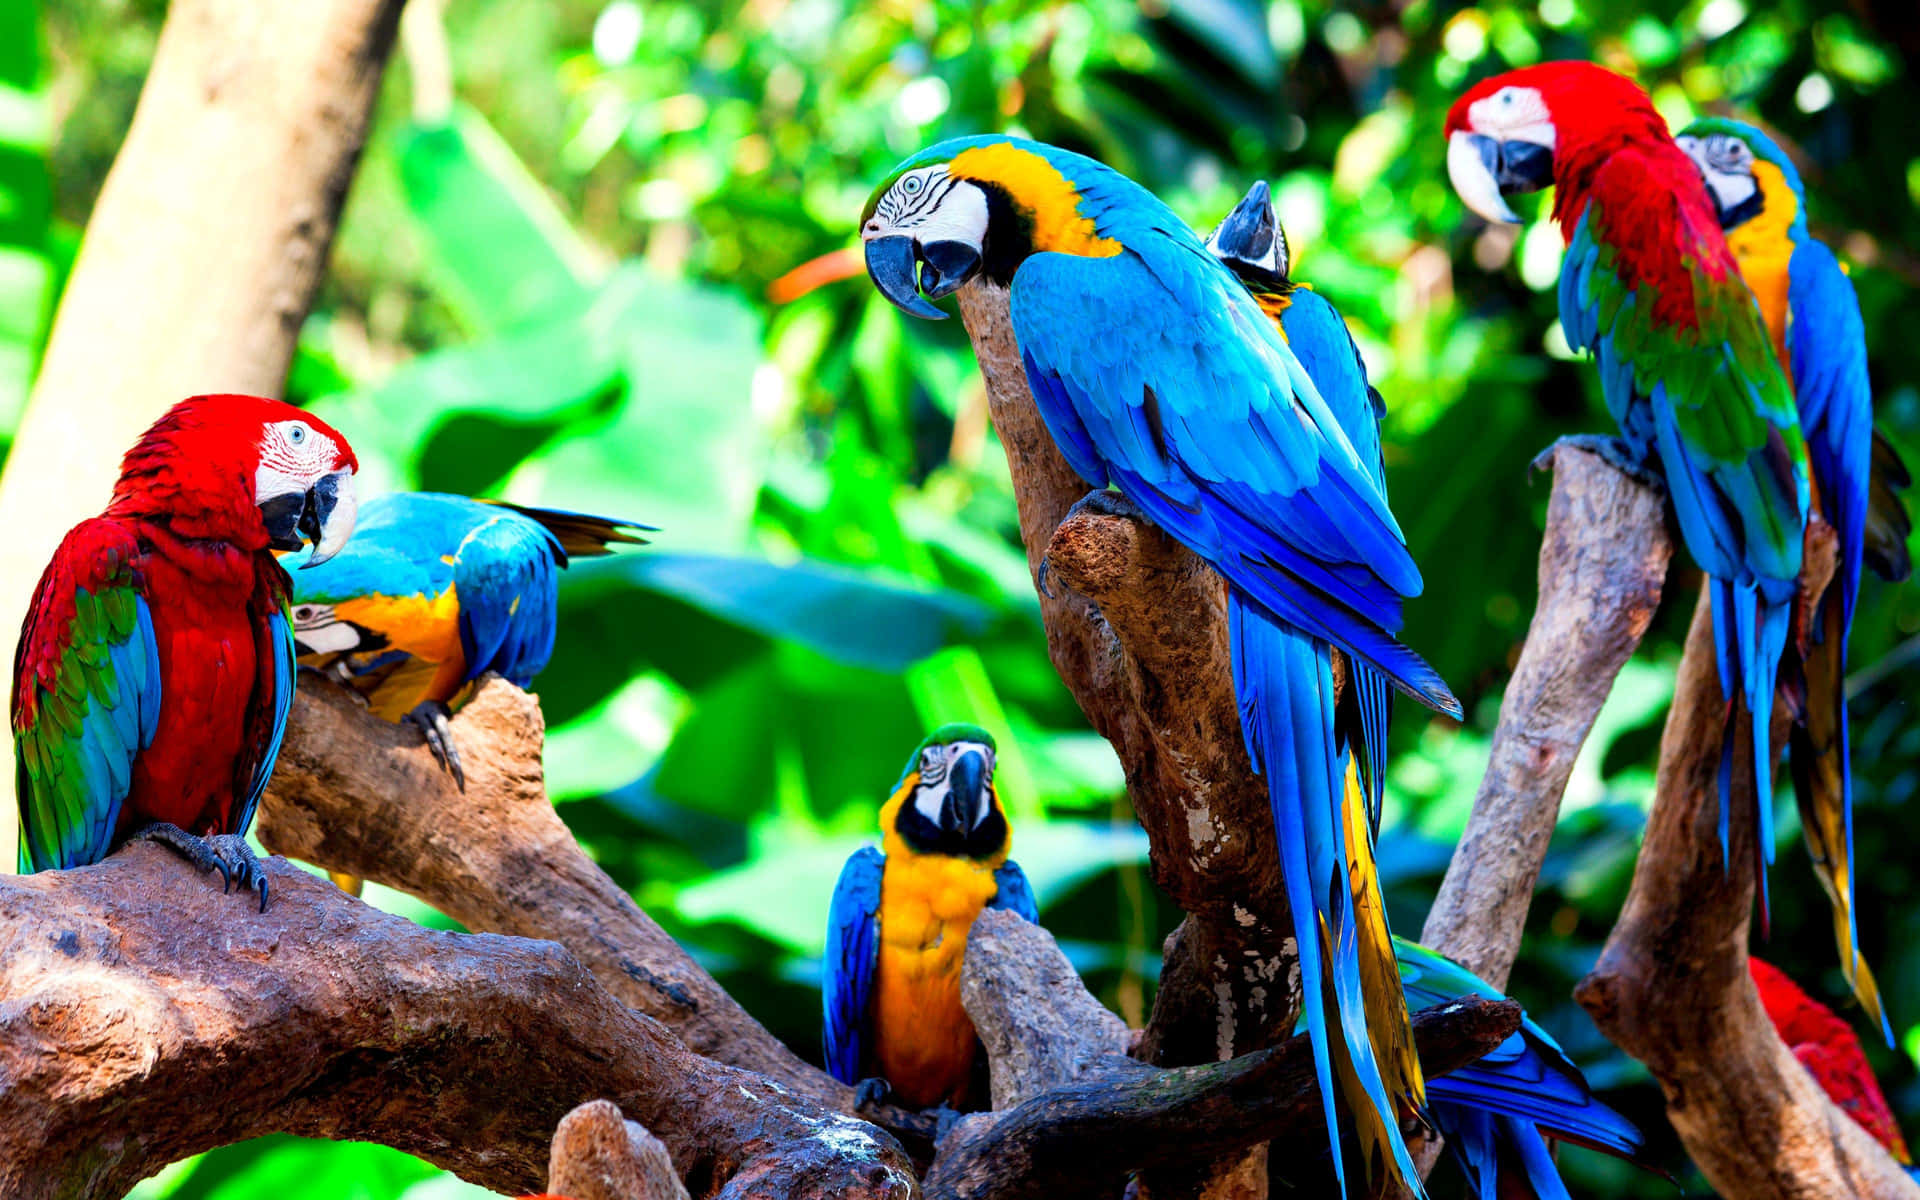 Colorful Macaws Perchedin Tropical Setting.jpg Wallpaper